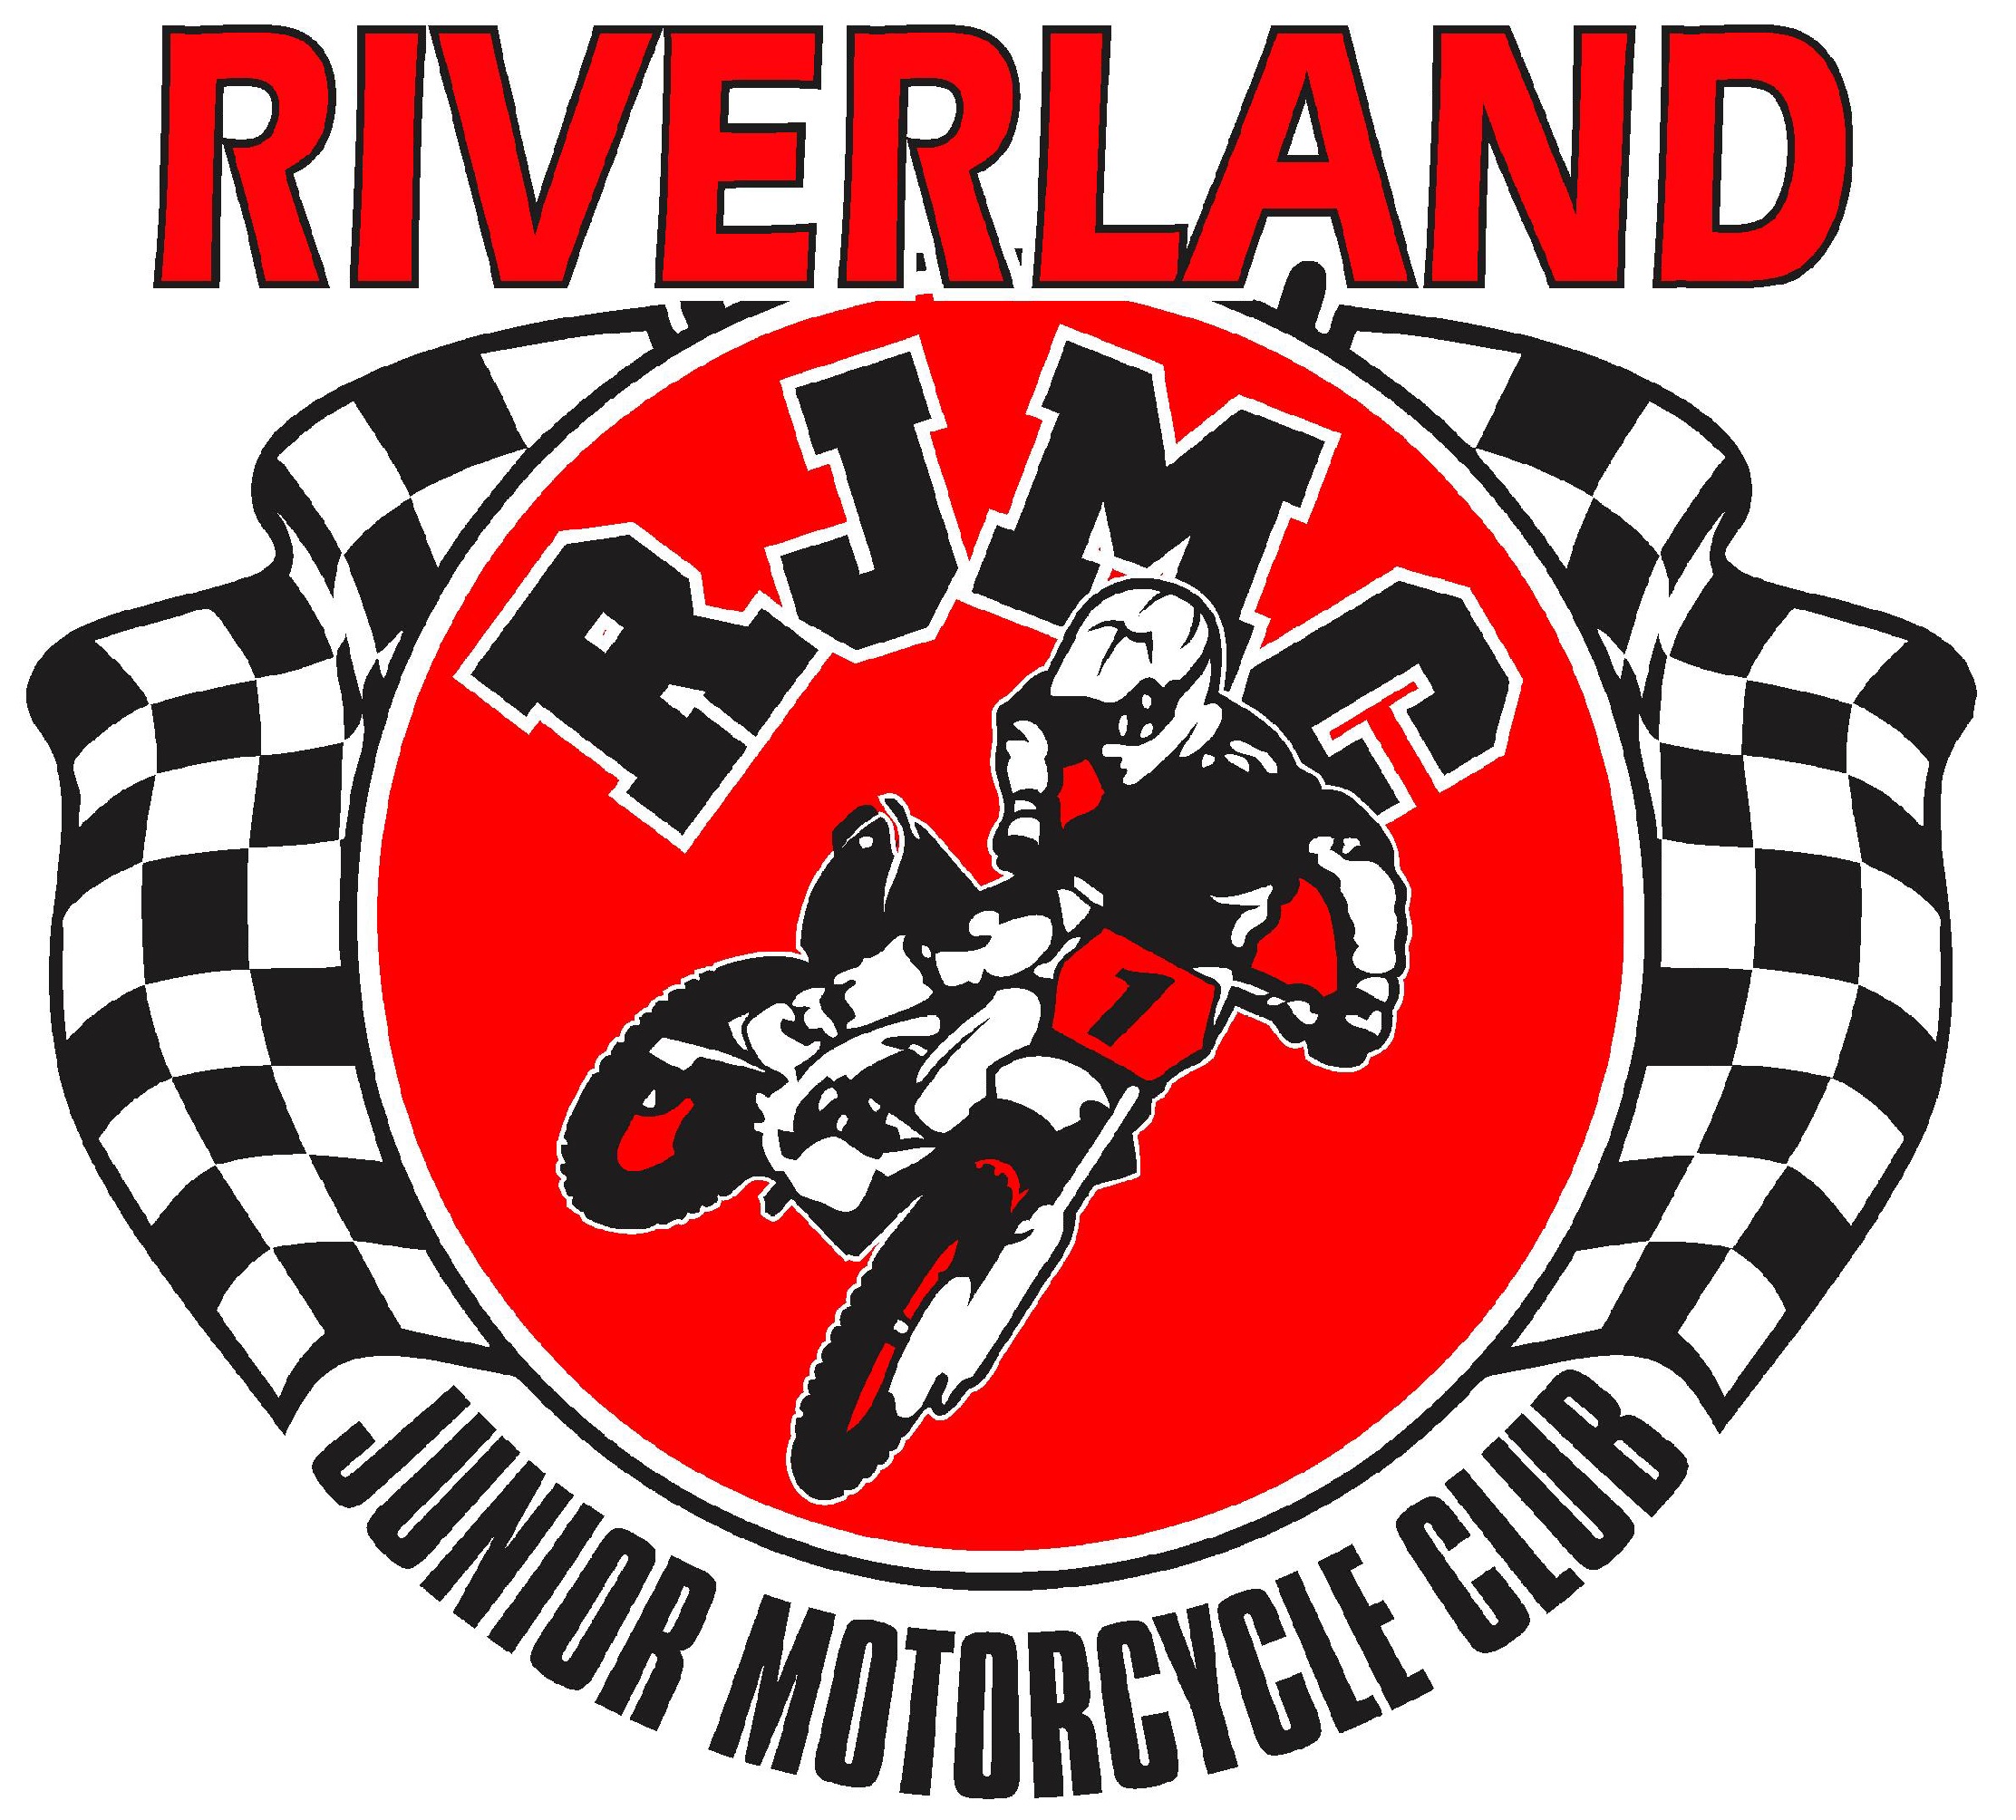 Riverland Junior Motorcycle Club